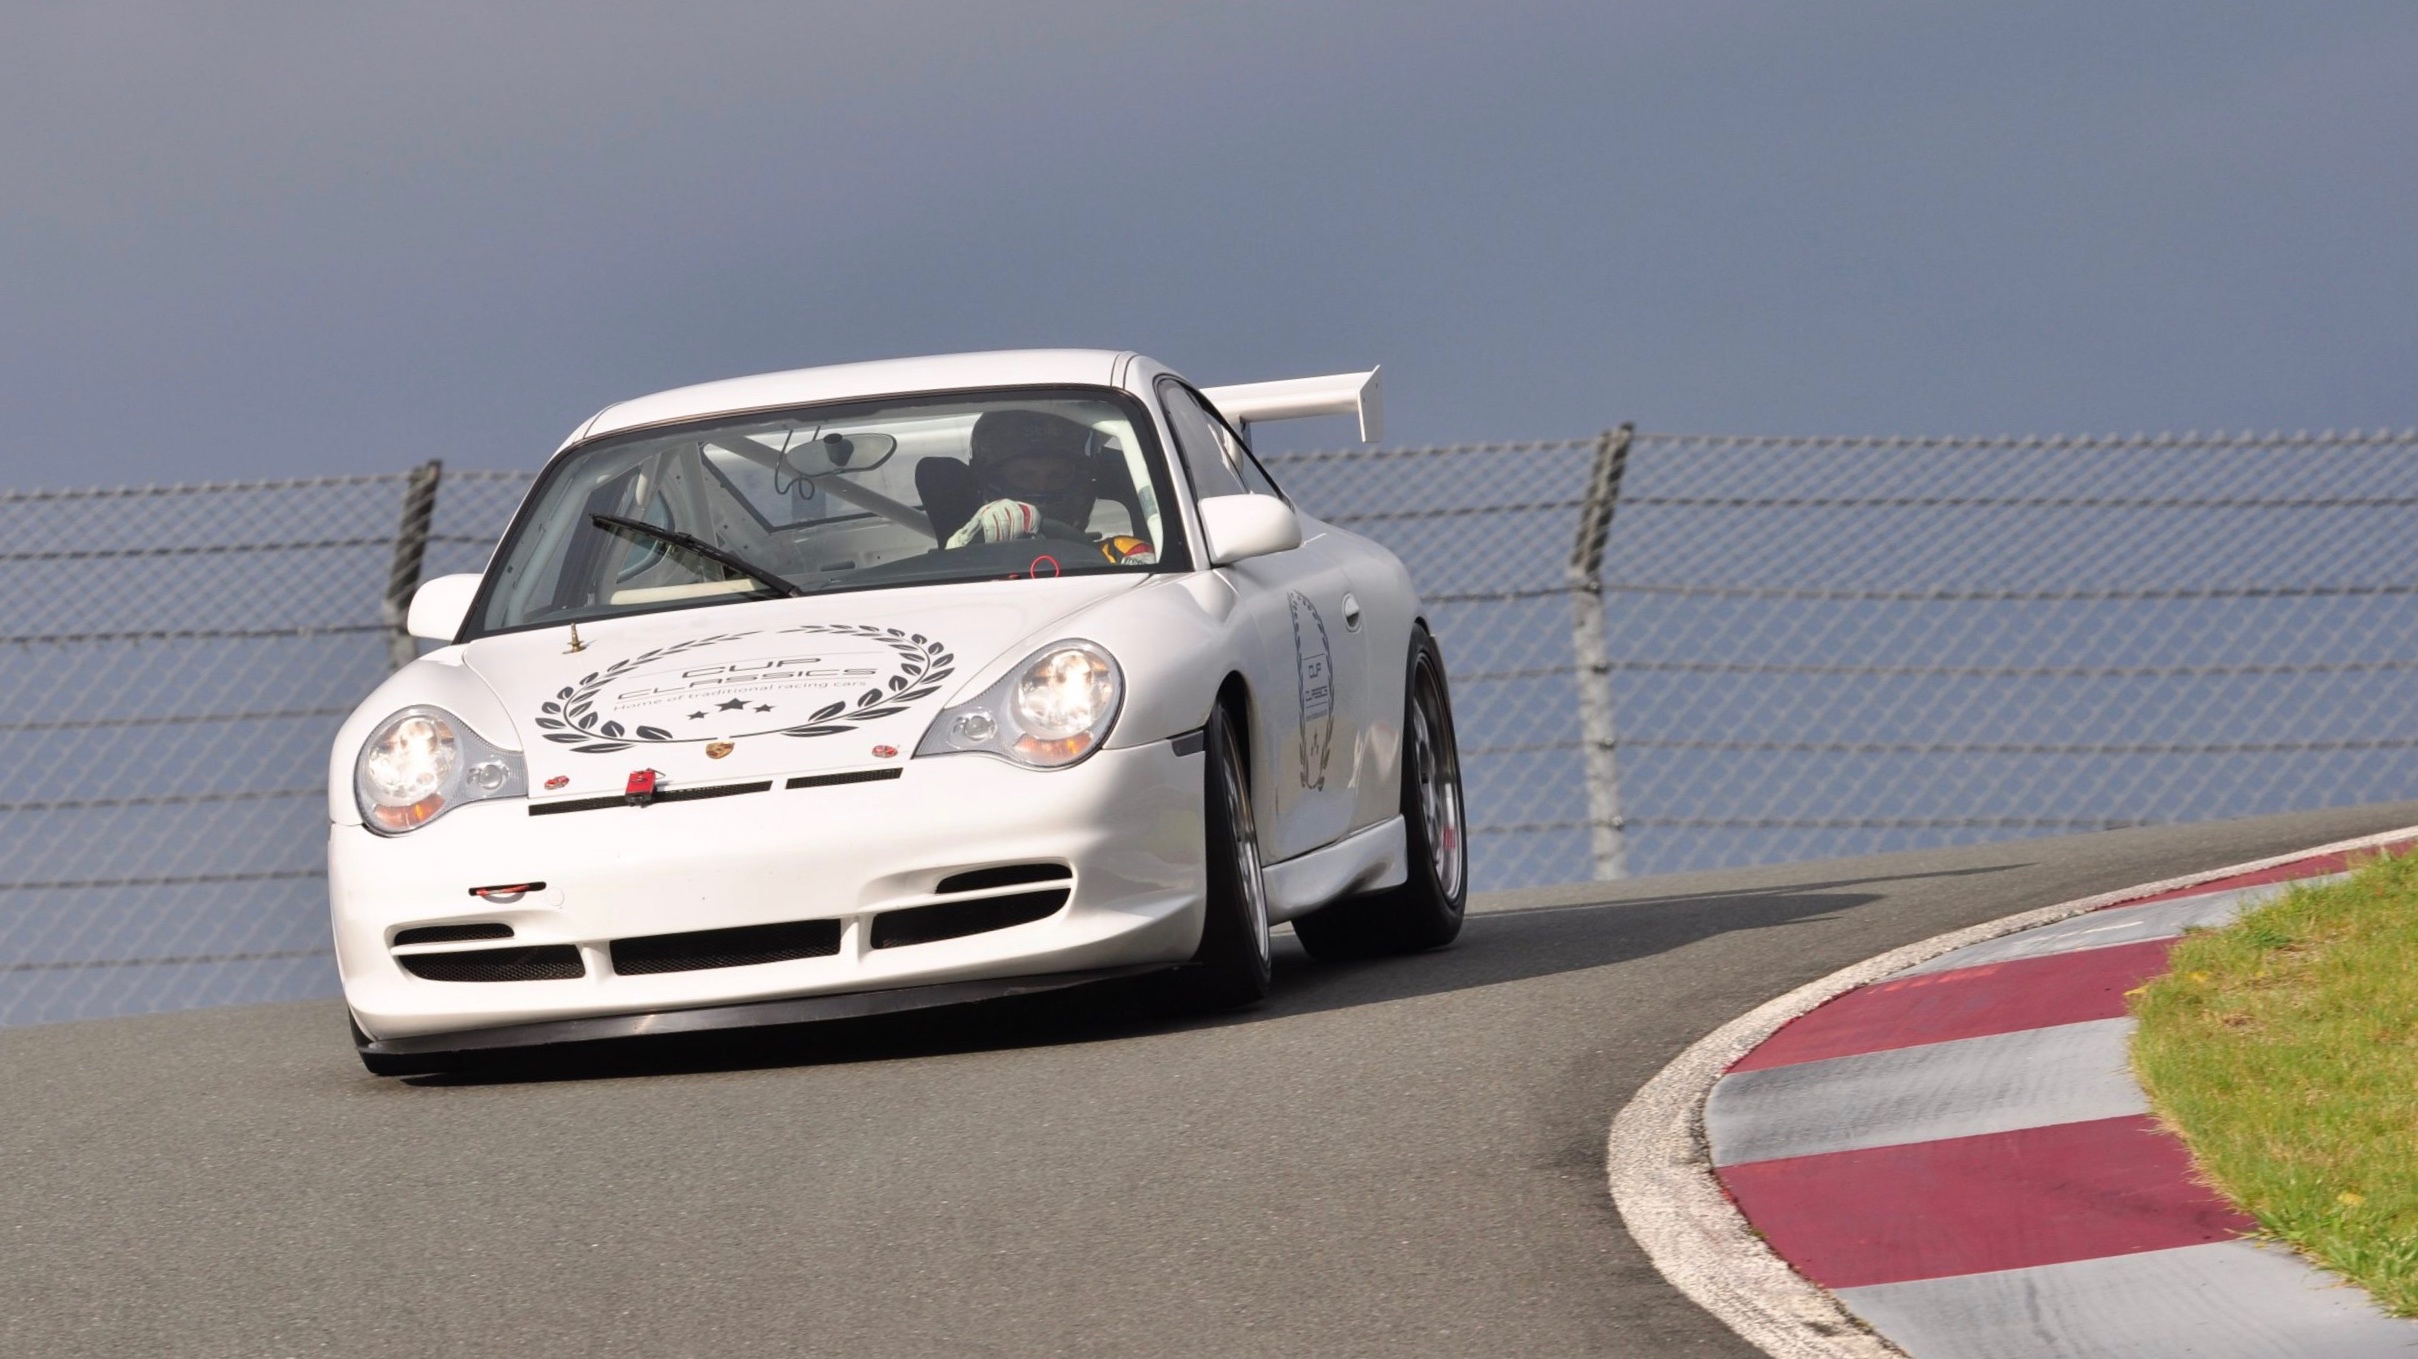 PreciselyWhite-Volume-1-Bilster-Berg-Cup-Classics-Porsche-911-GT3-2698